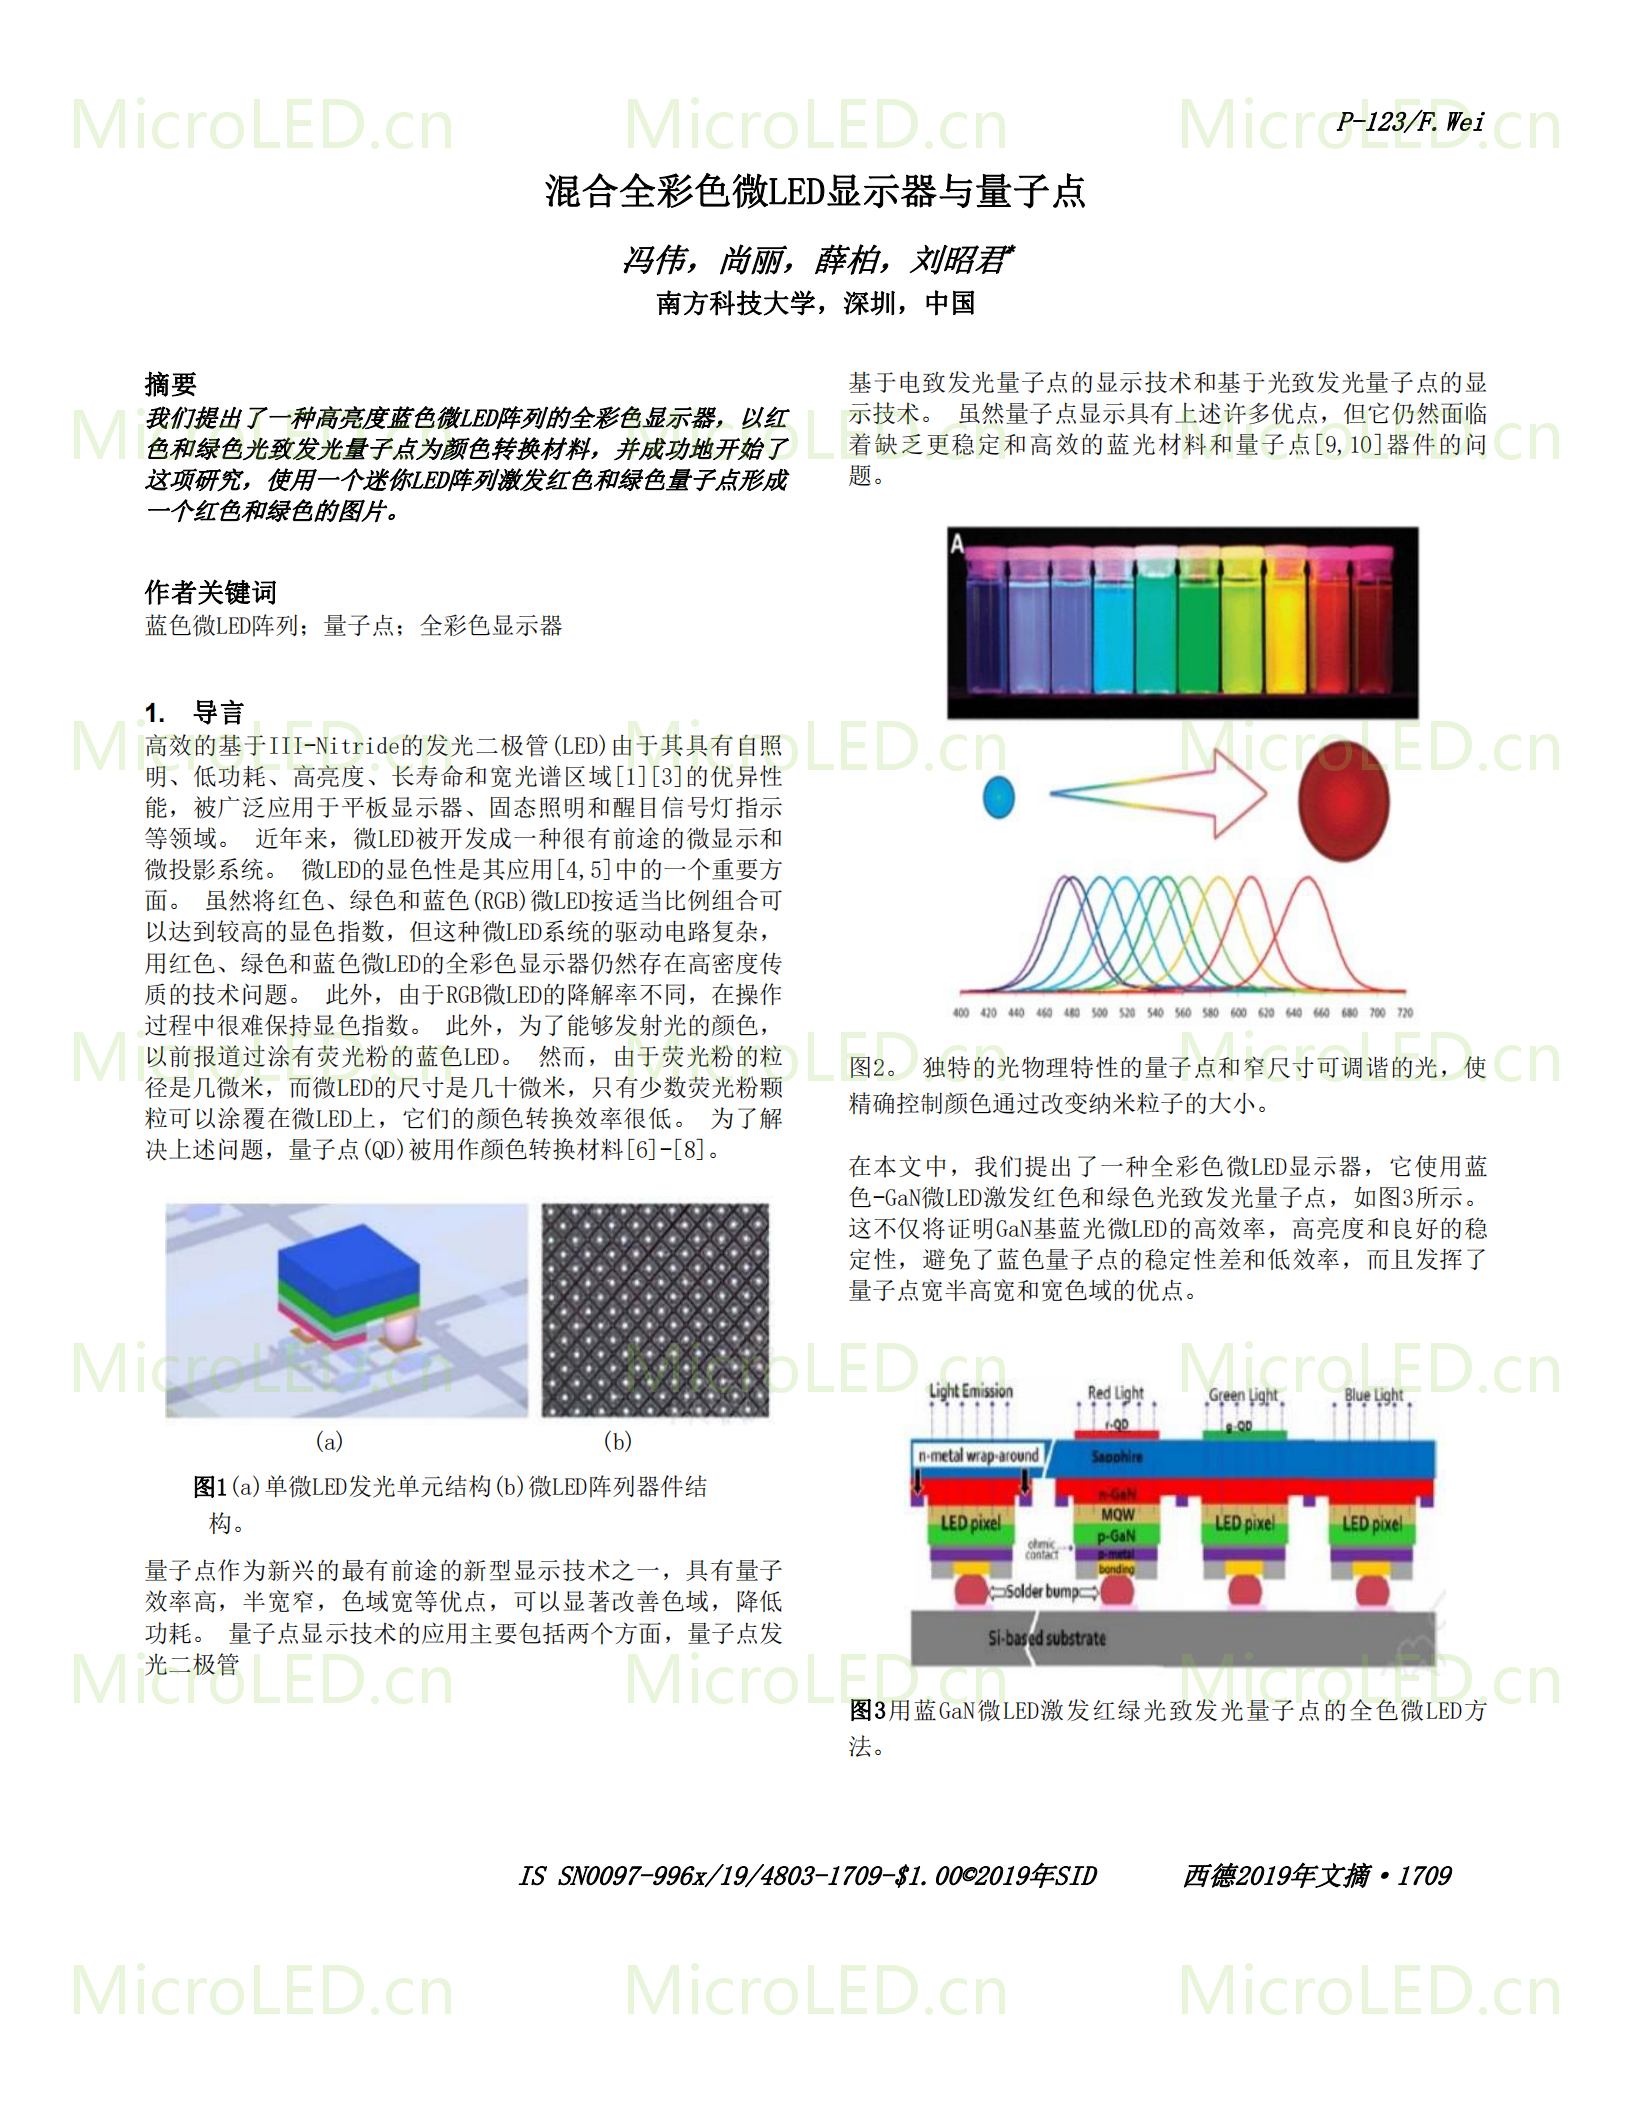 混合全彩色MicroLED显示器与量子点